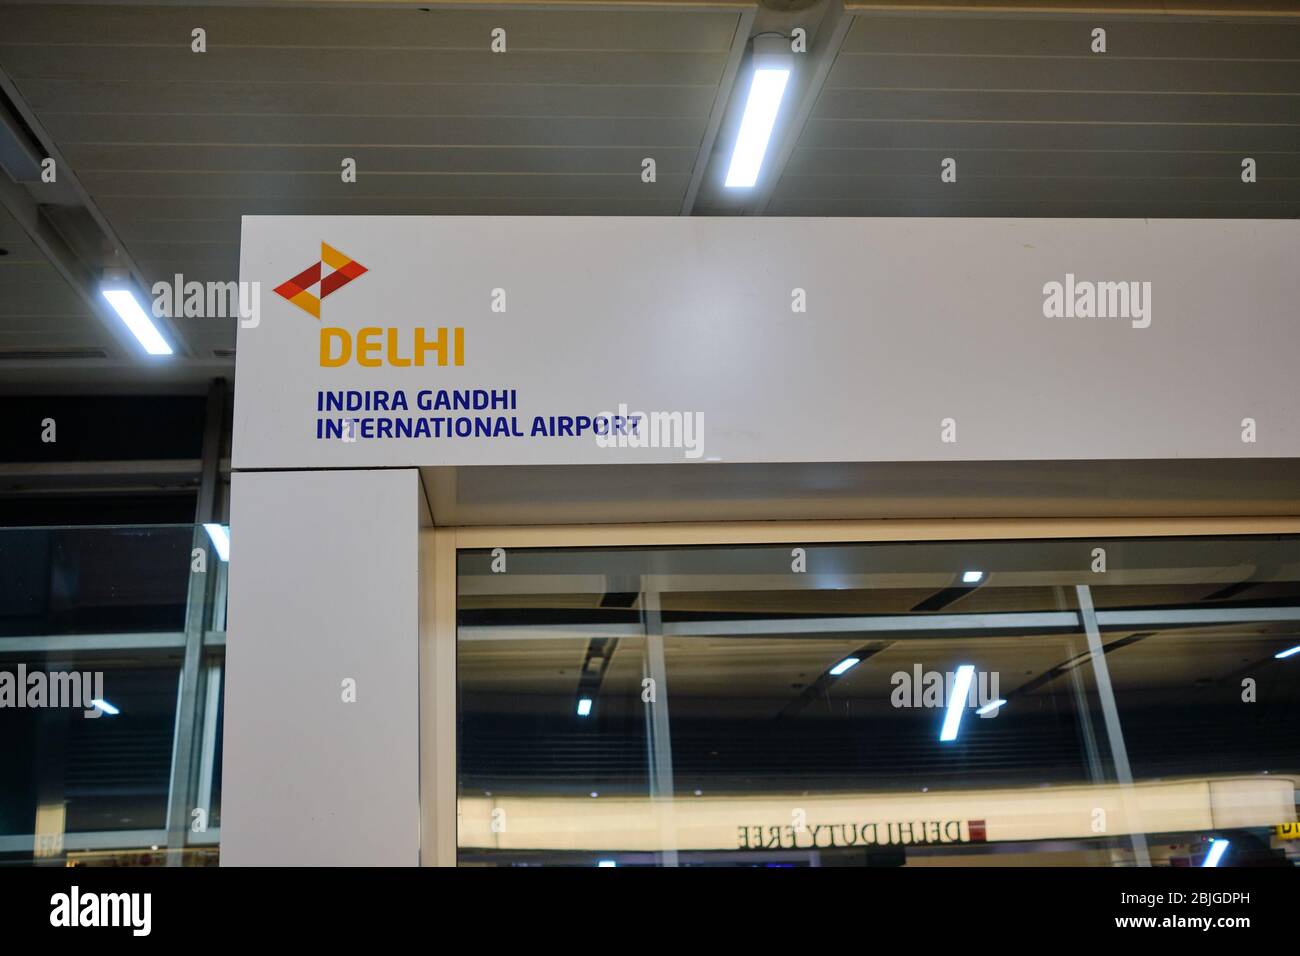 New Delhi / India - October 12, 2019: Logo of the Indira Gandhi International Airport on a departure gate, New Delhi, India Stock Photo